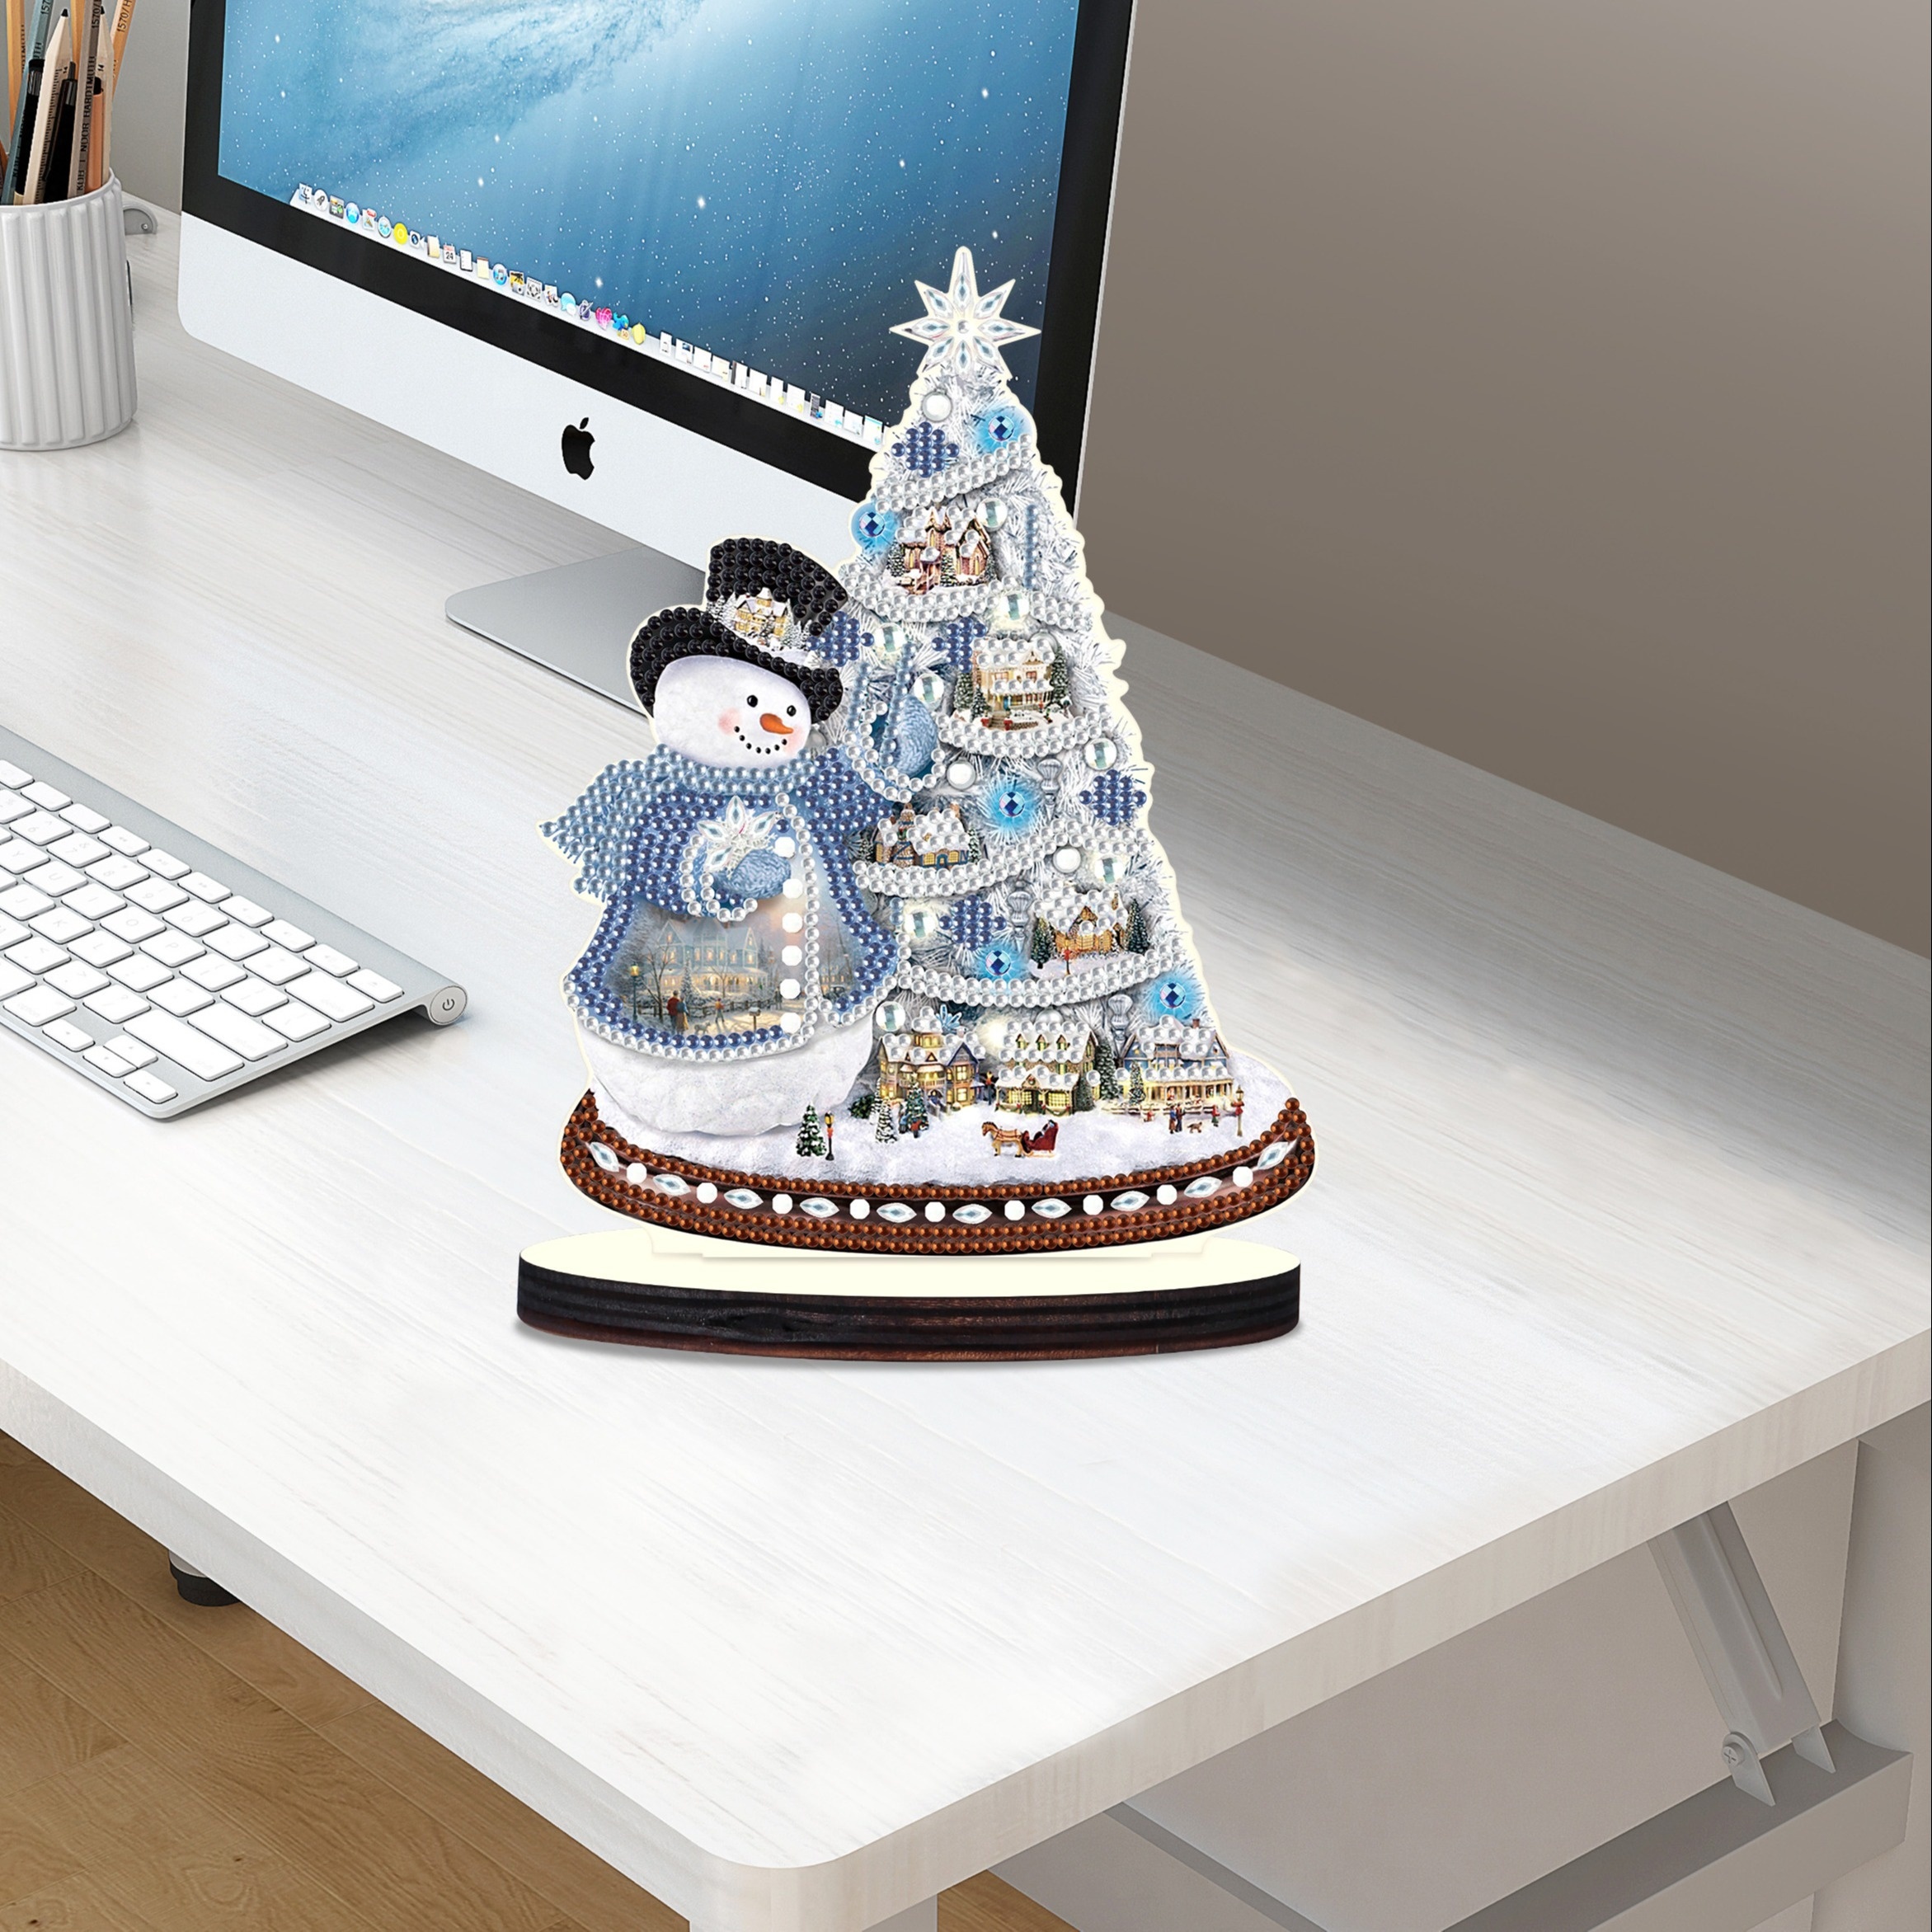 Diamond Painting Christmas Tree on Stand - Shop now - JobaStores